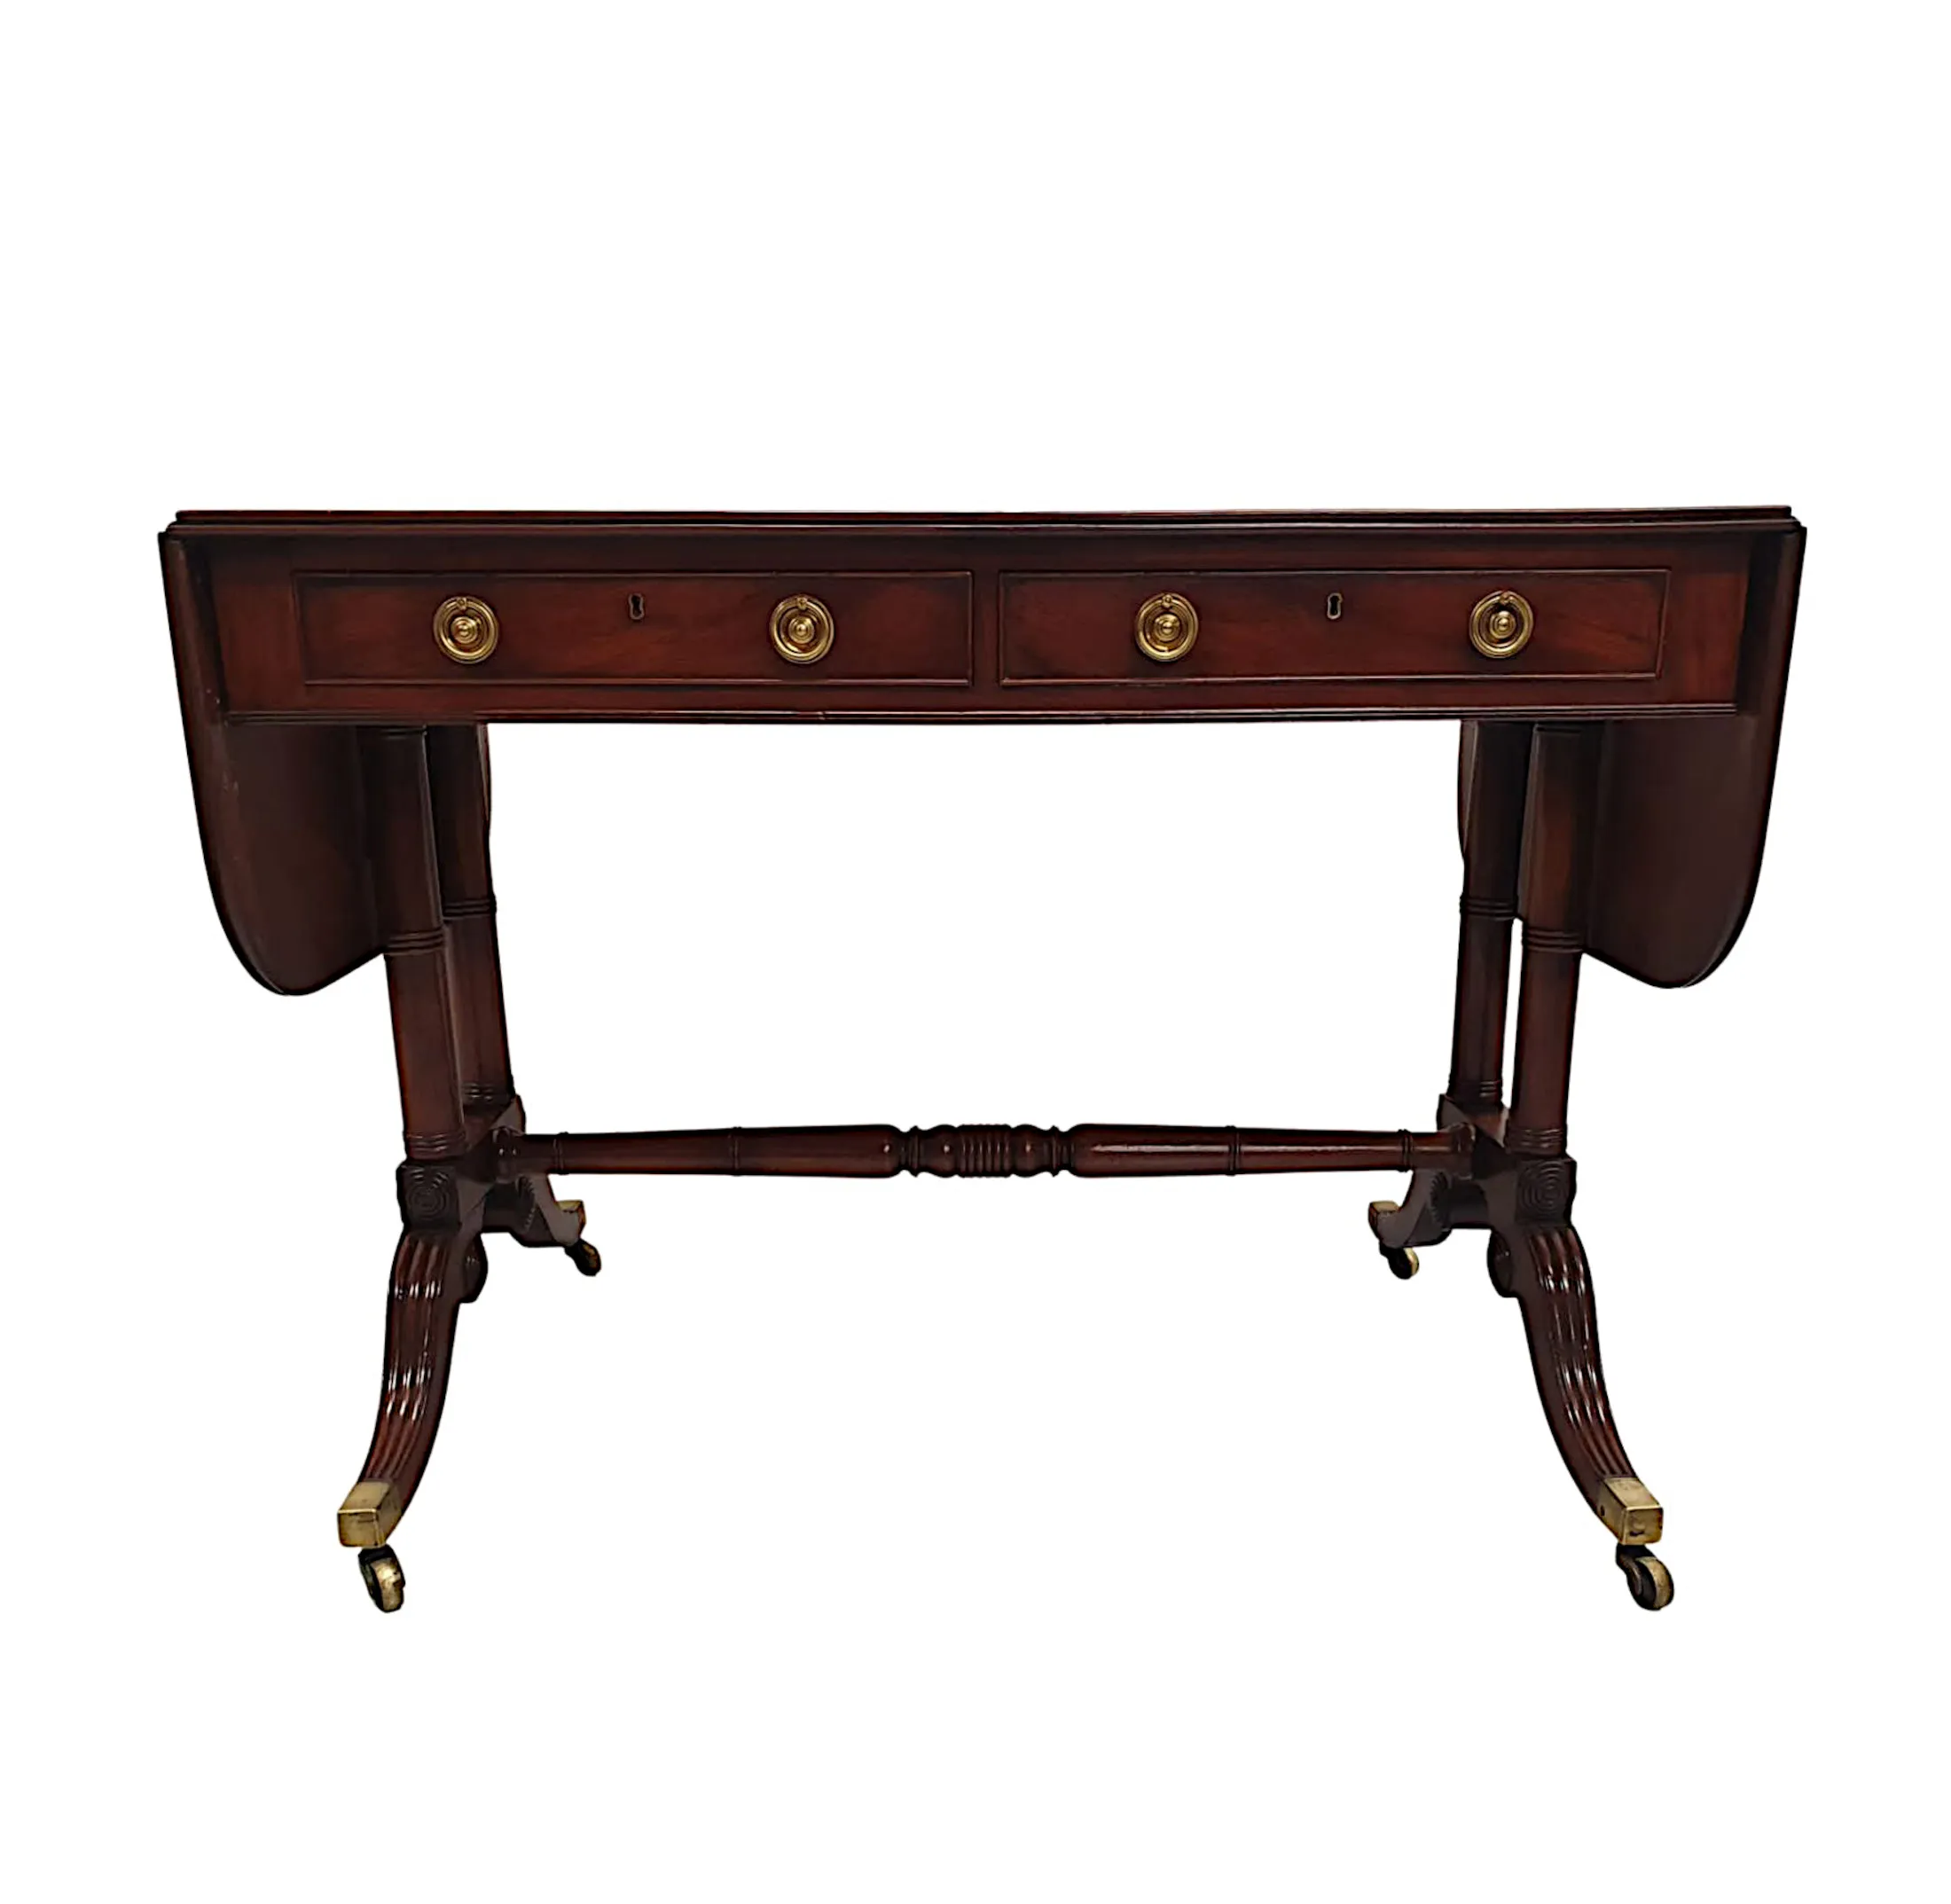 A Very Fine Early 19th Century Regency Sofa Table